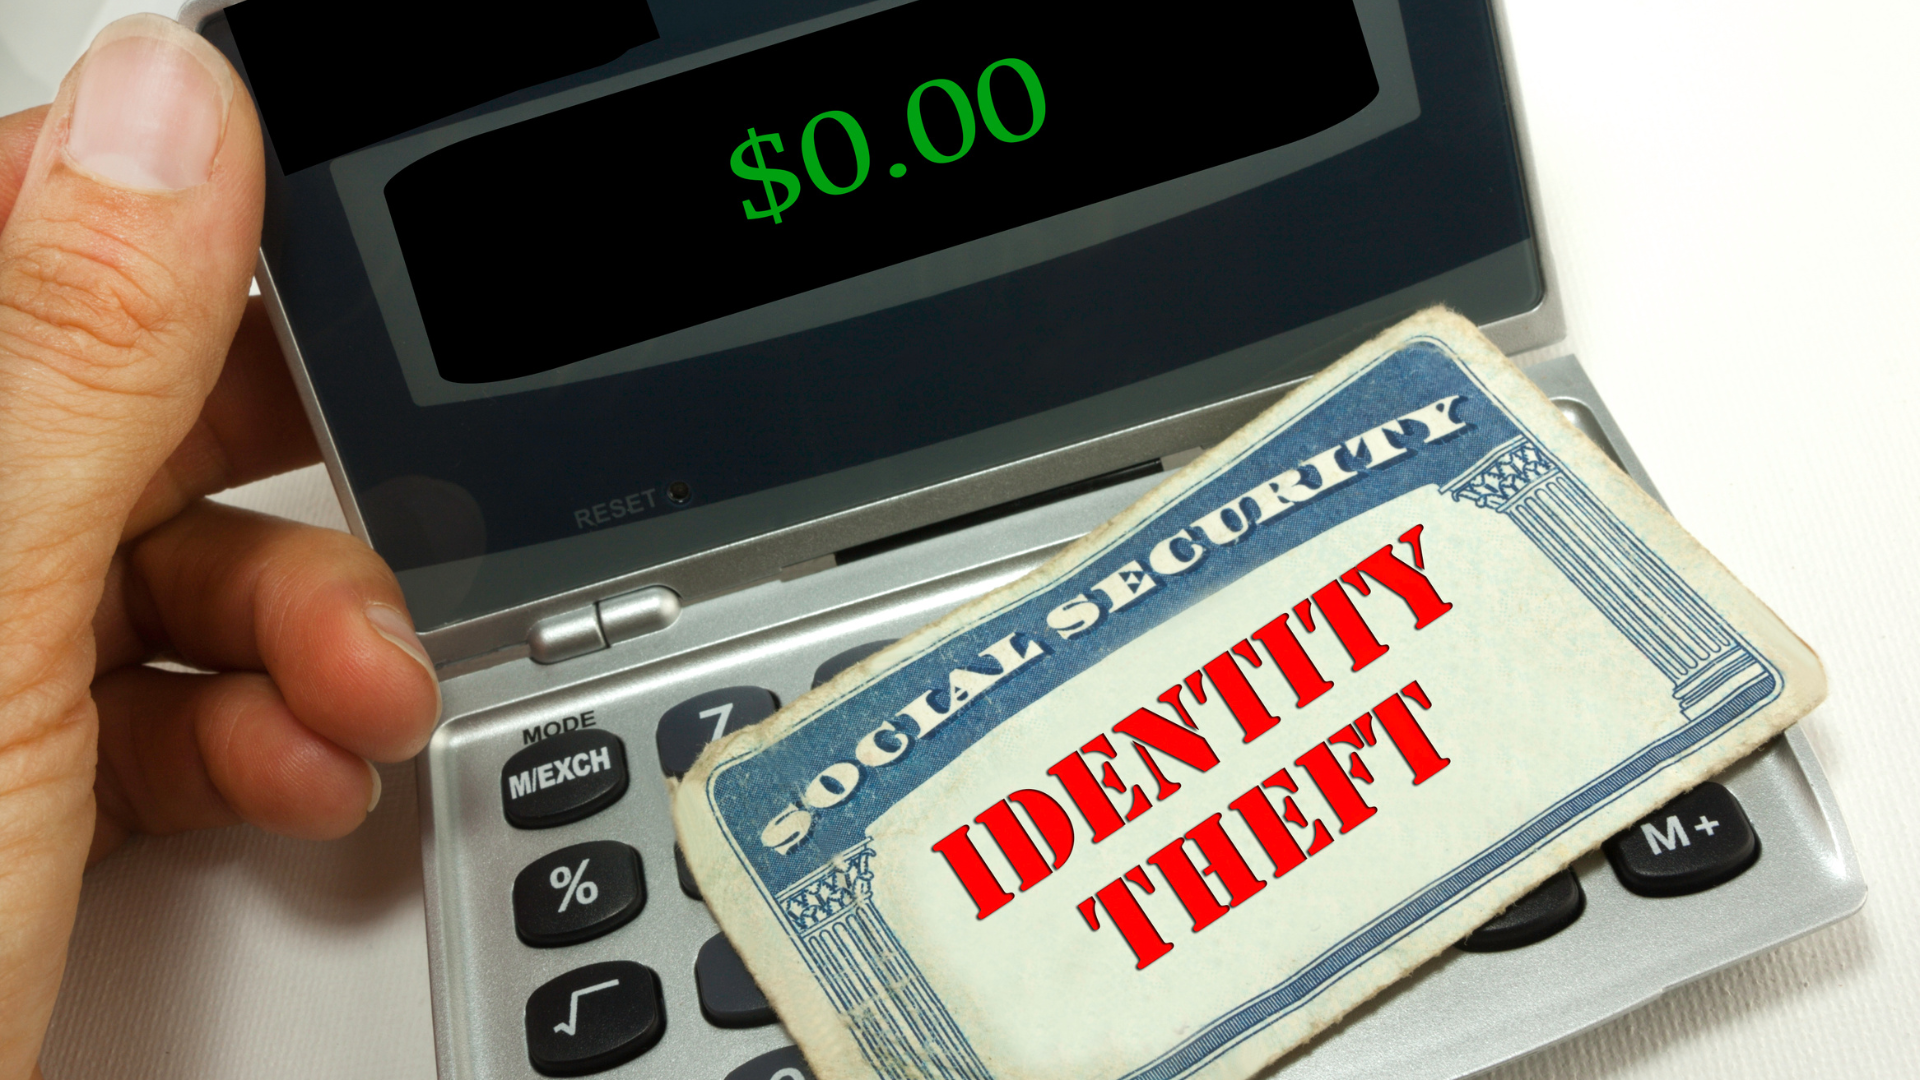 business identity theft